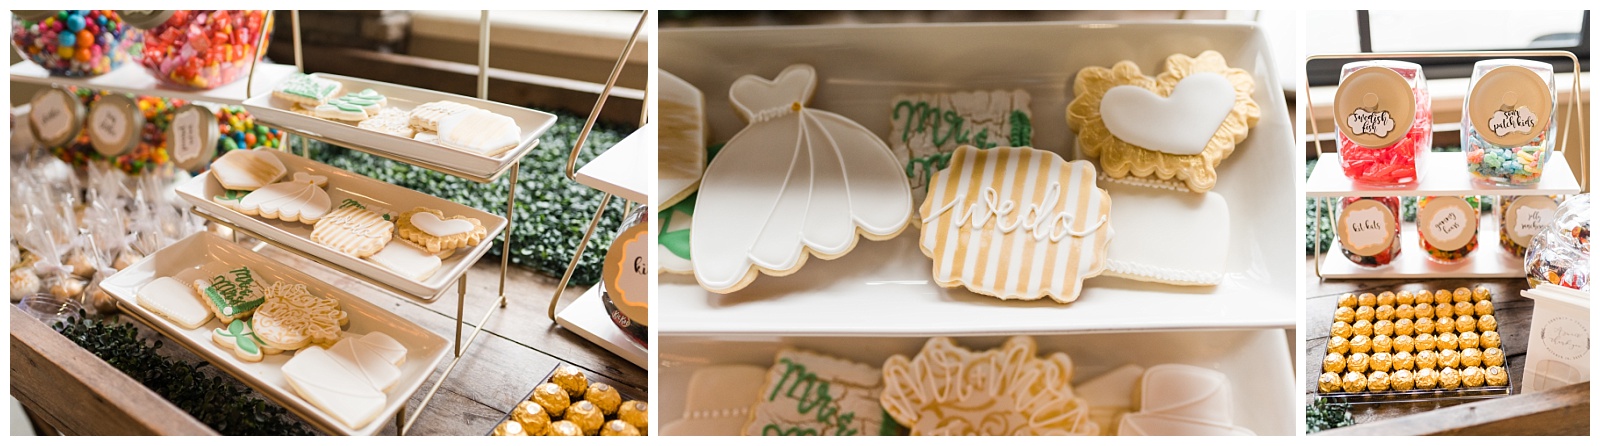 personalized wedding cookies and sweets display. Photo taken by jenn eddine photography, a greensboro north carolina wedding photographer